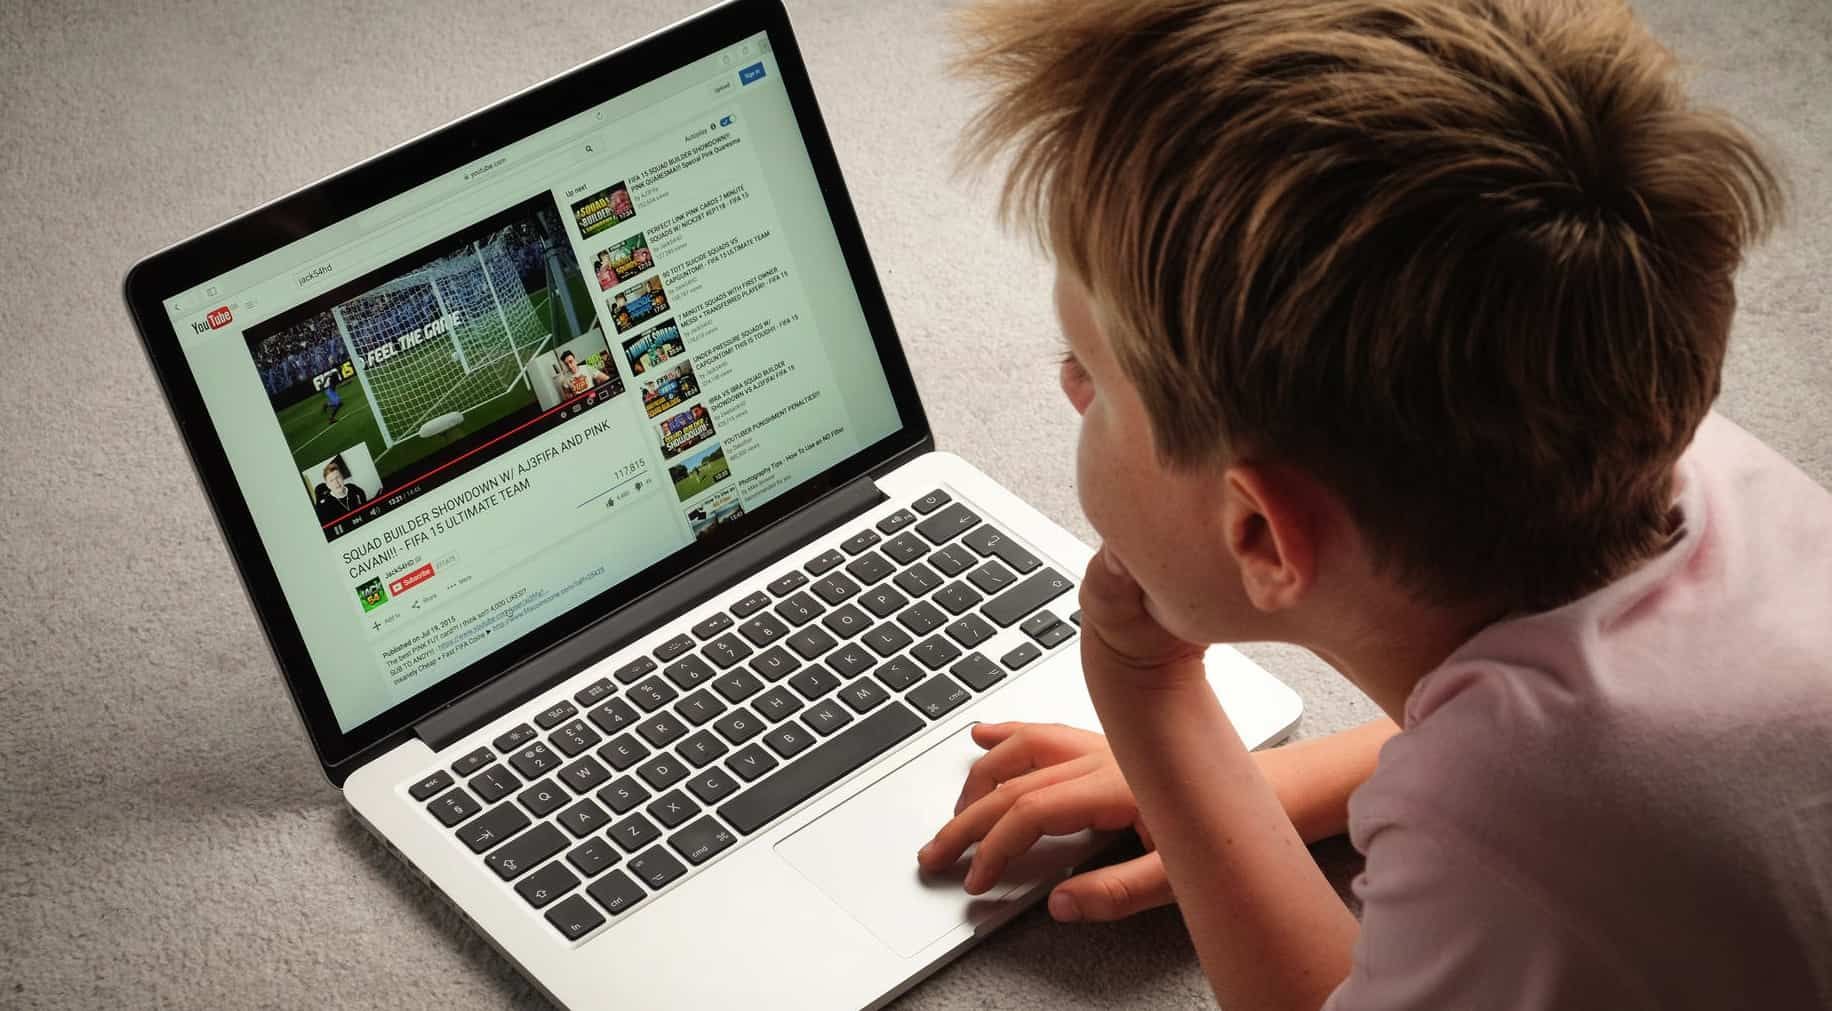 ребенок смотрит видео на YouTube с ноутбуком